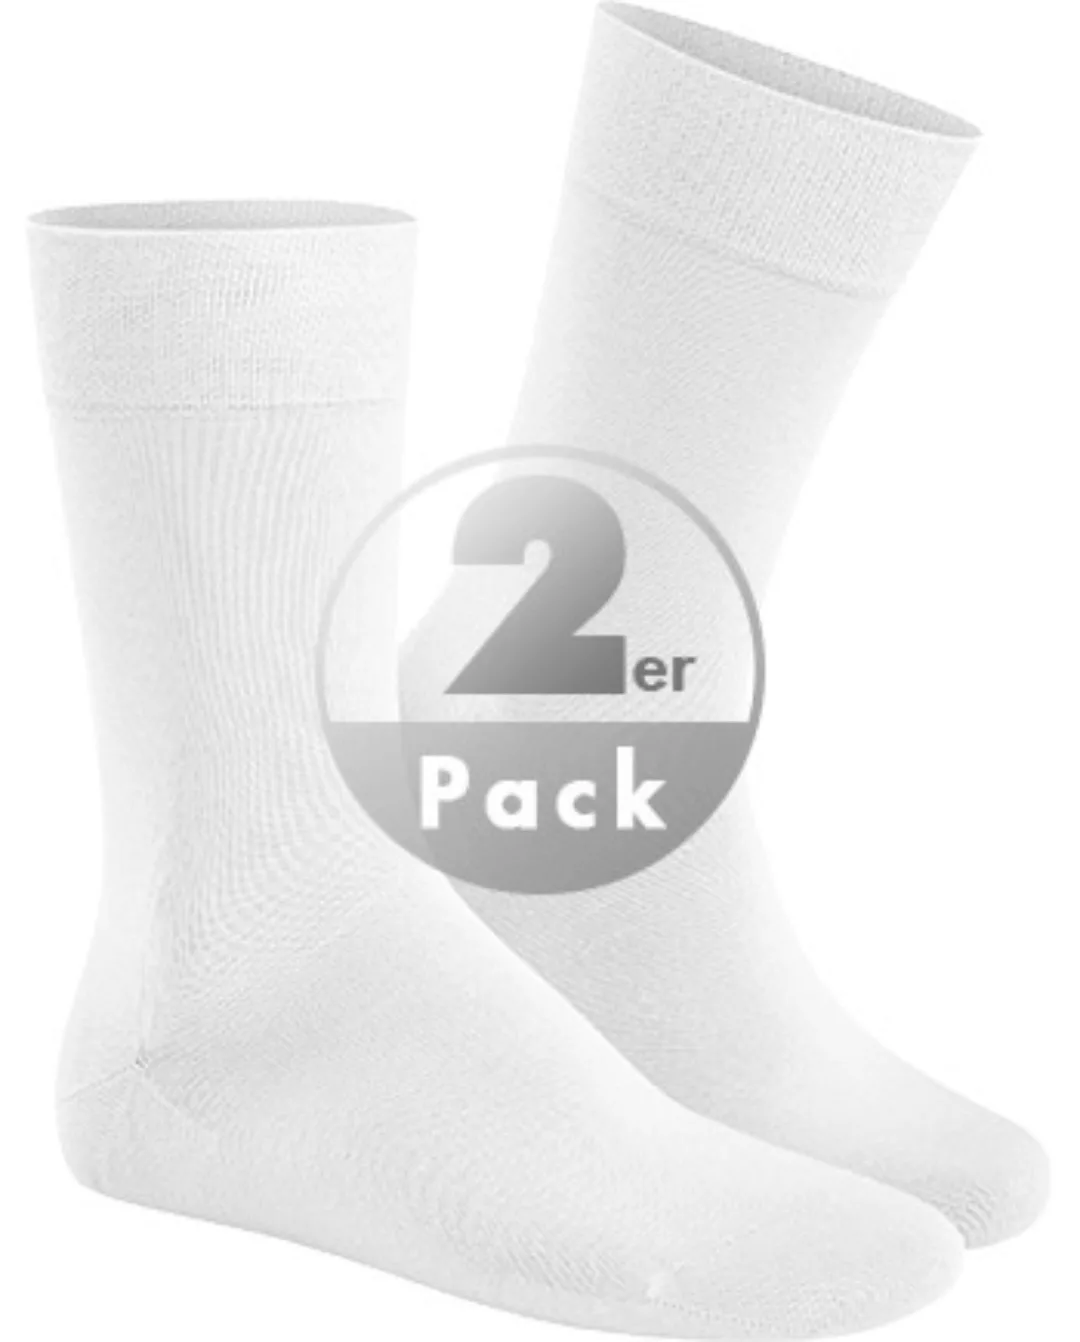 Hudson Only Socken 2er Pack 024491/0550 günstig online kaufen